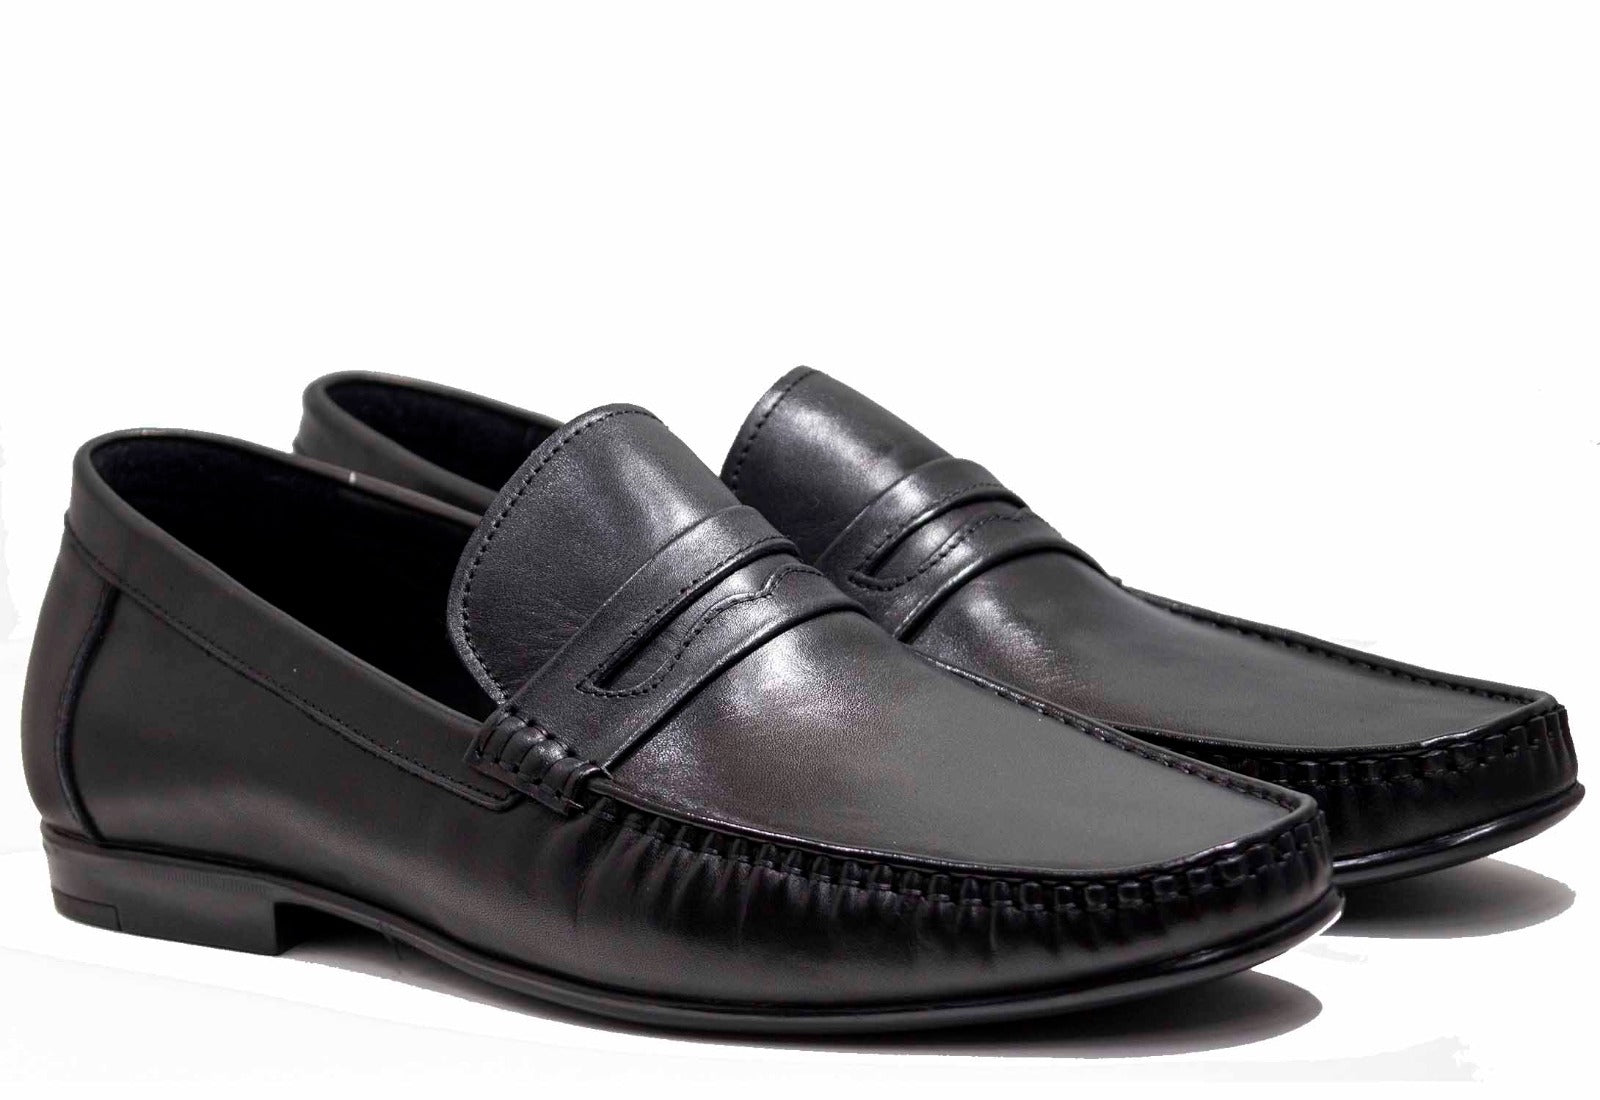 Mario Samello Men's Penny Loafer Dress Shoes B03502 2